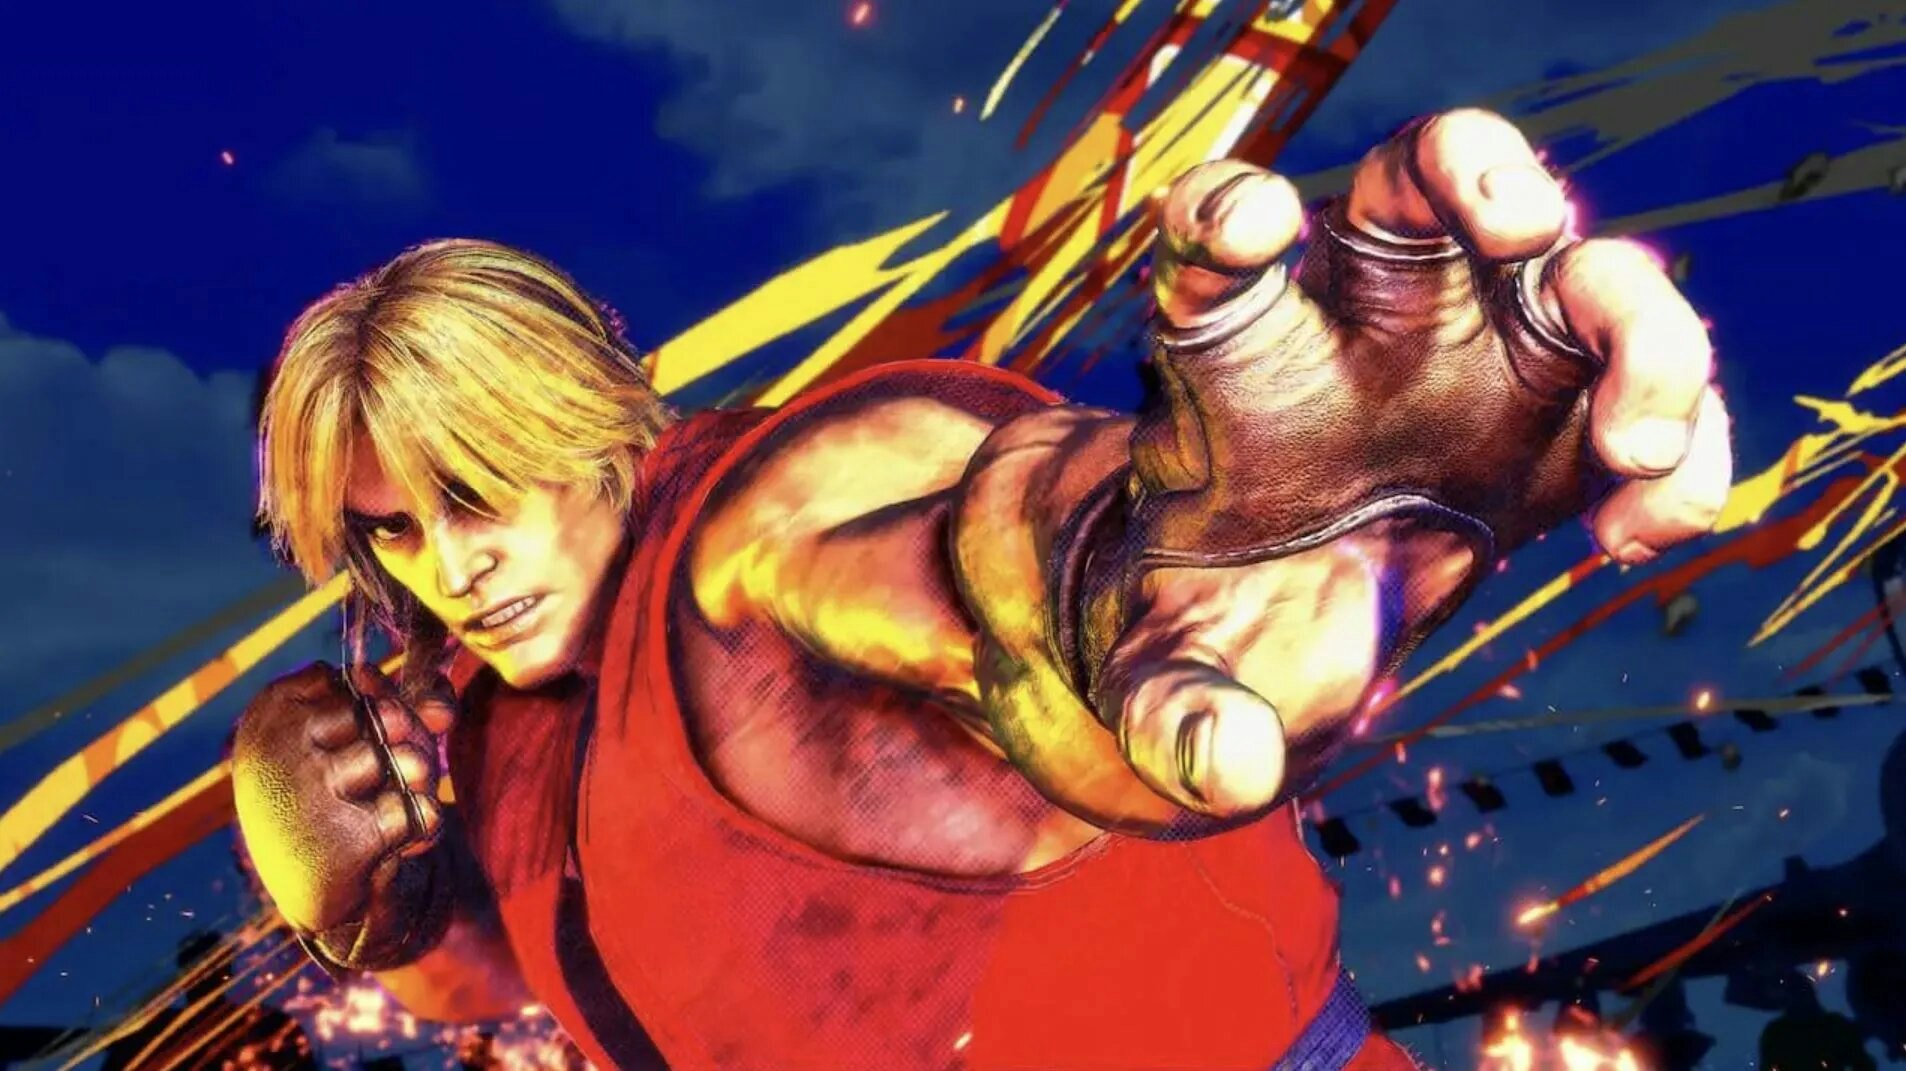 Buy Street Fighter 6 on GAMESLOAD